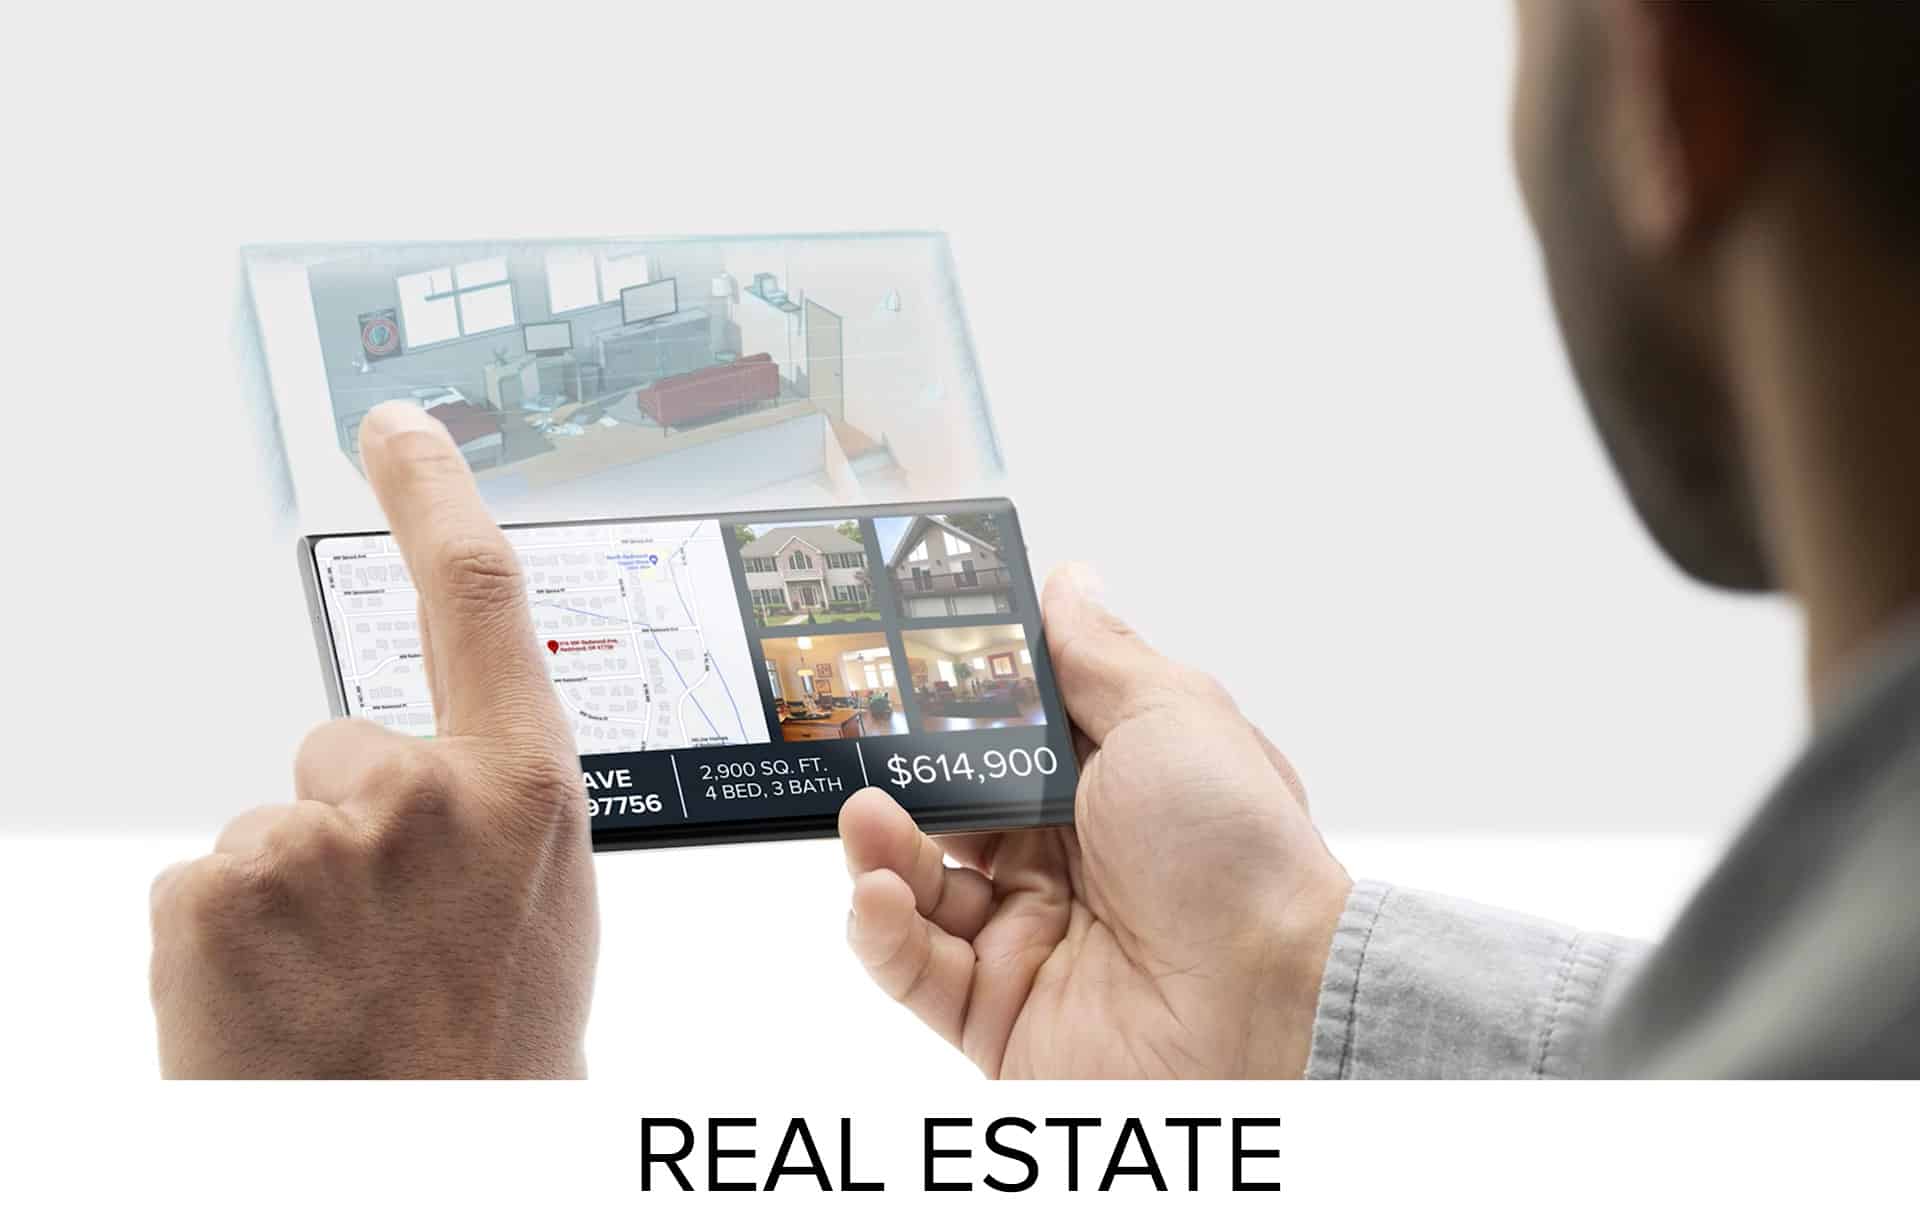 Real Estate Shopping Hologram using IKIN's RYZ technology